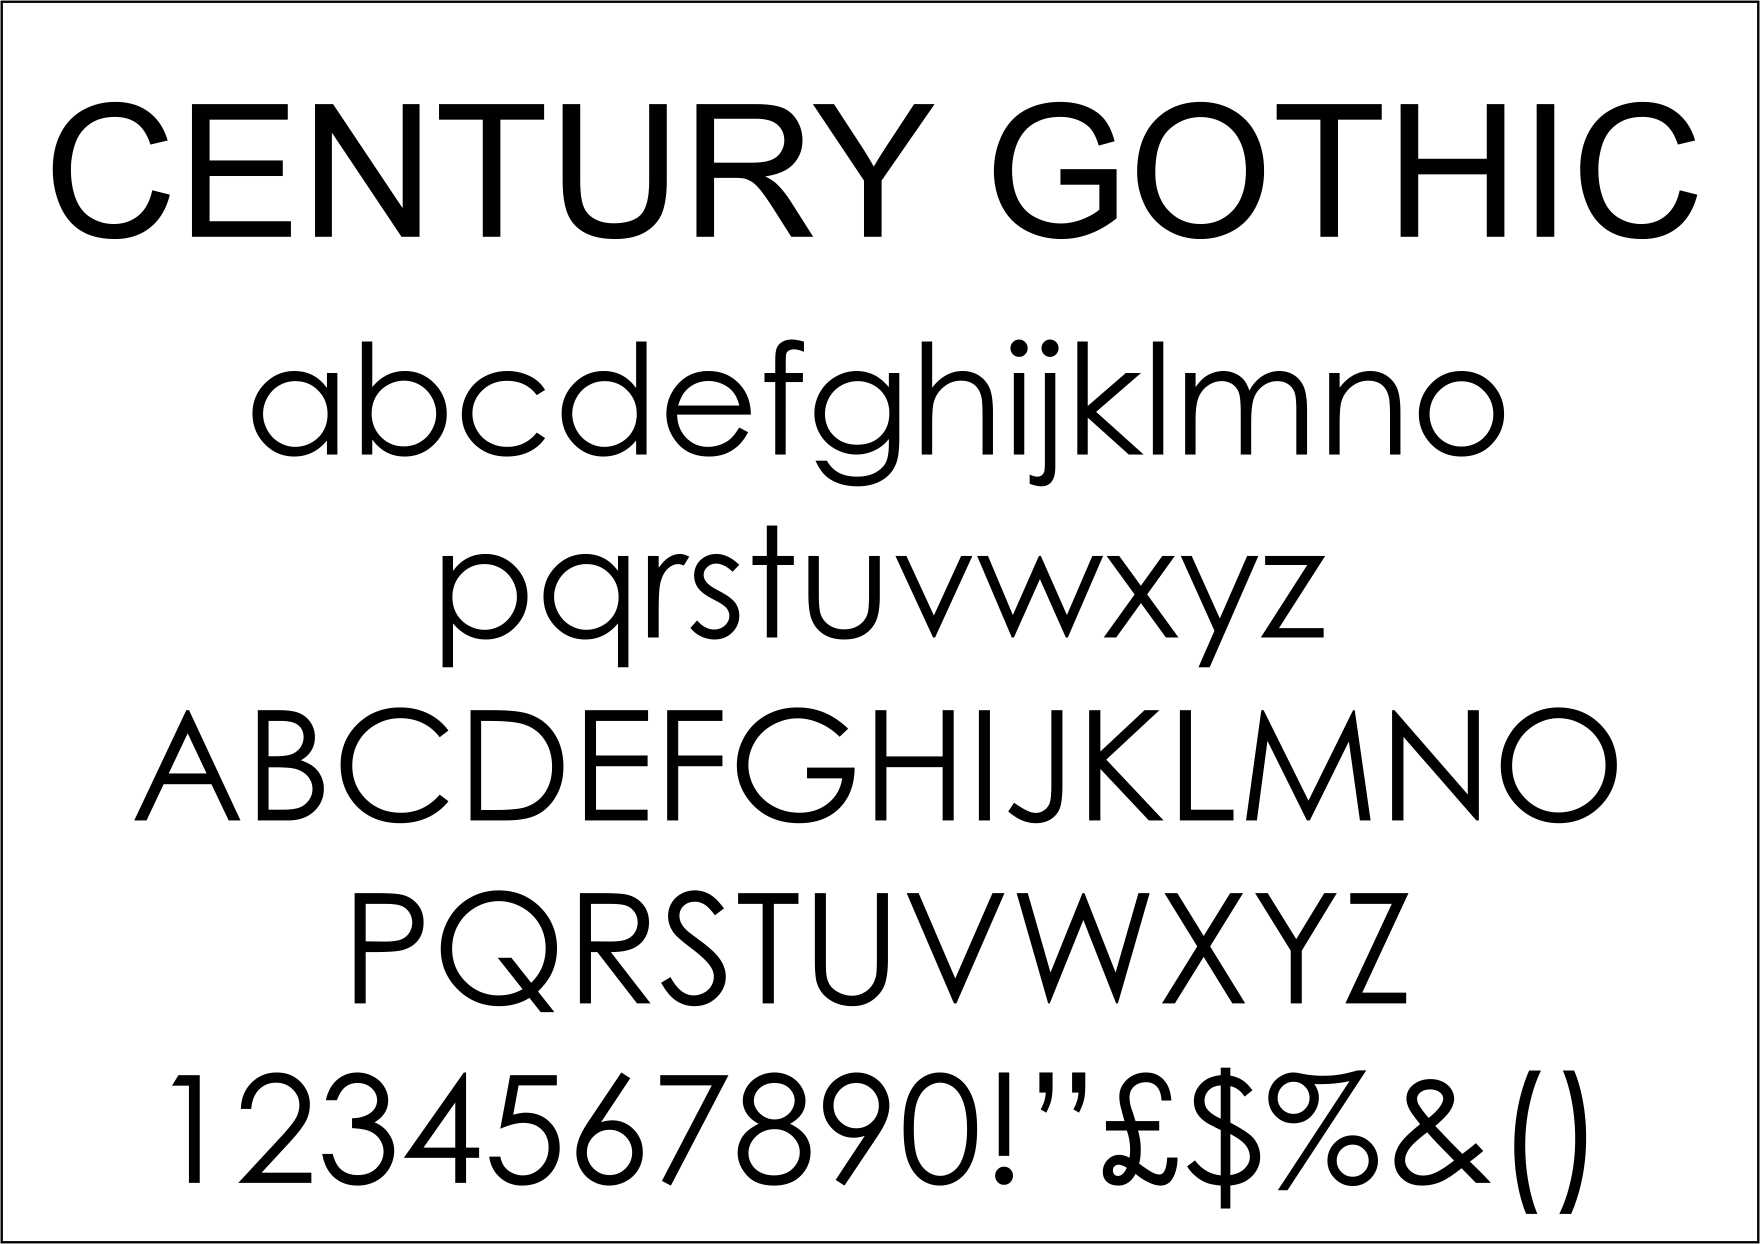 Century Gothic Tattoo Fonts